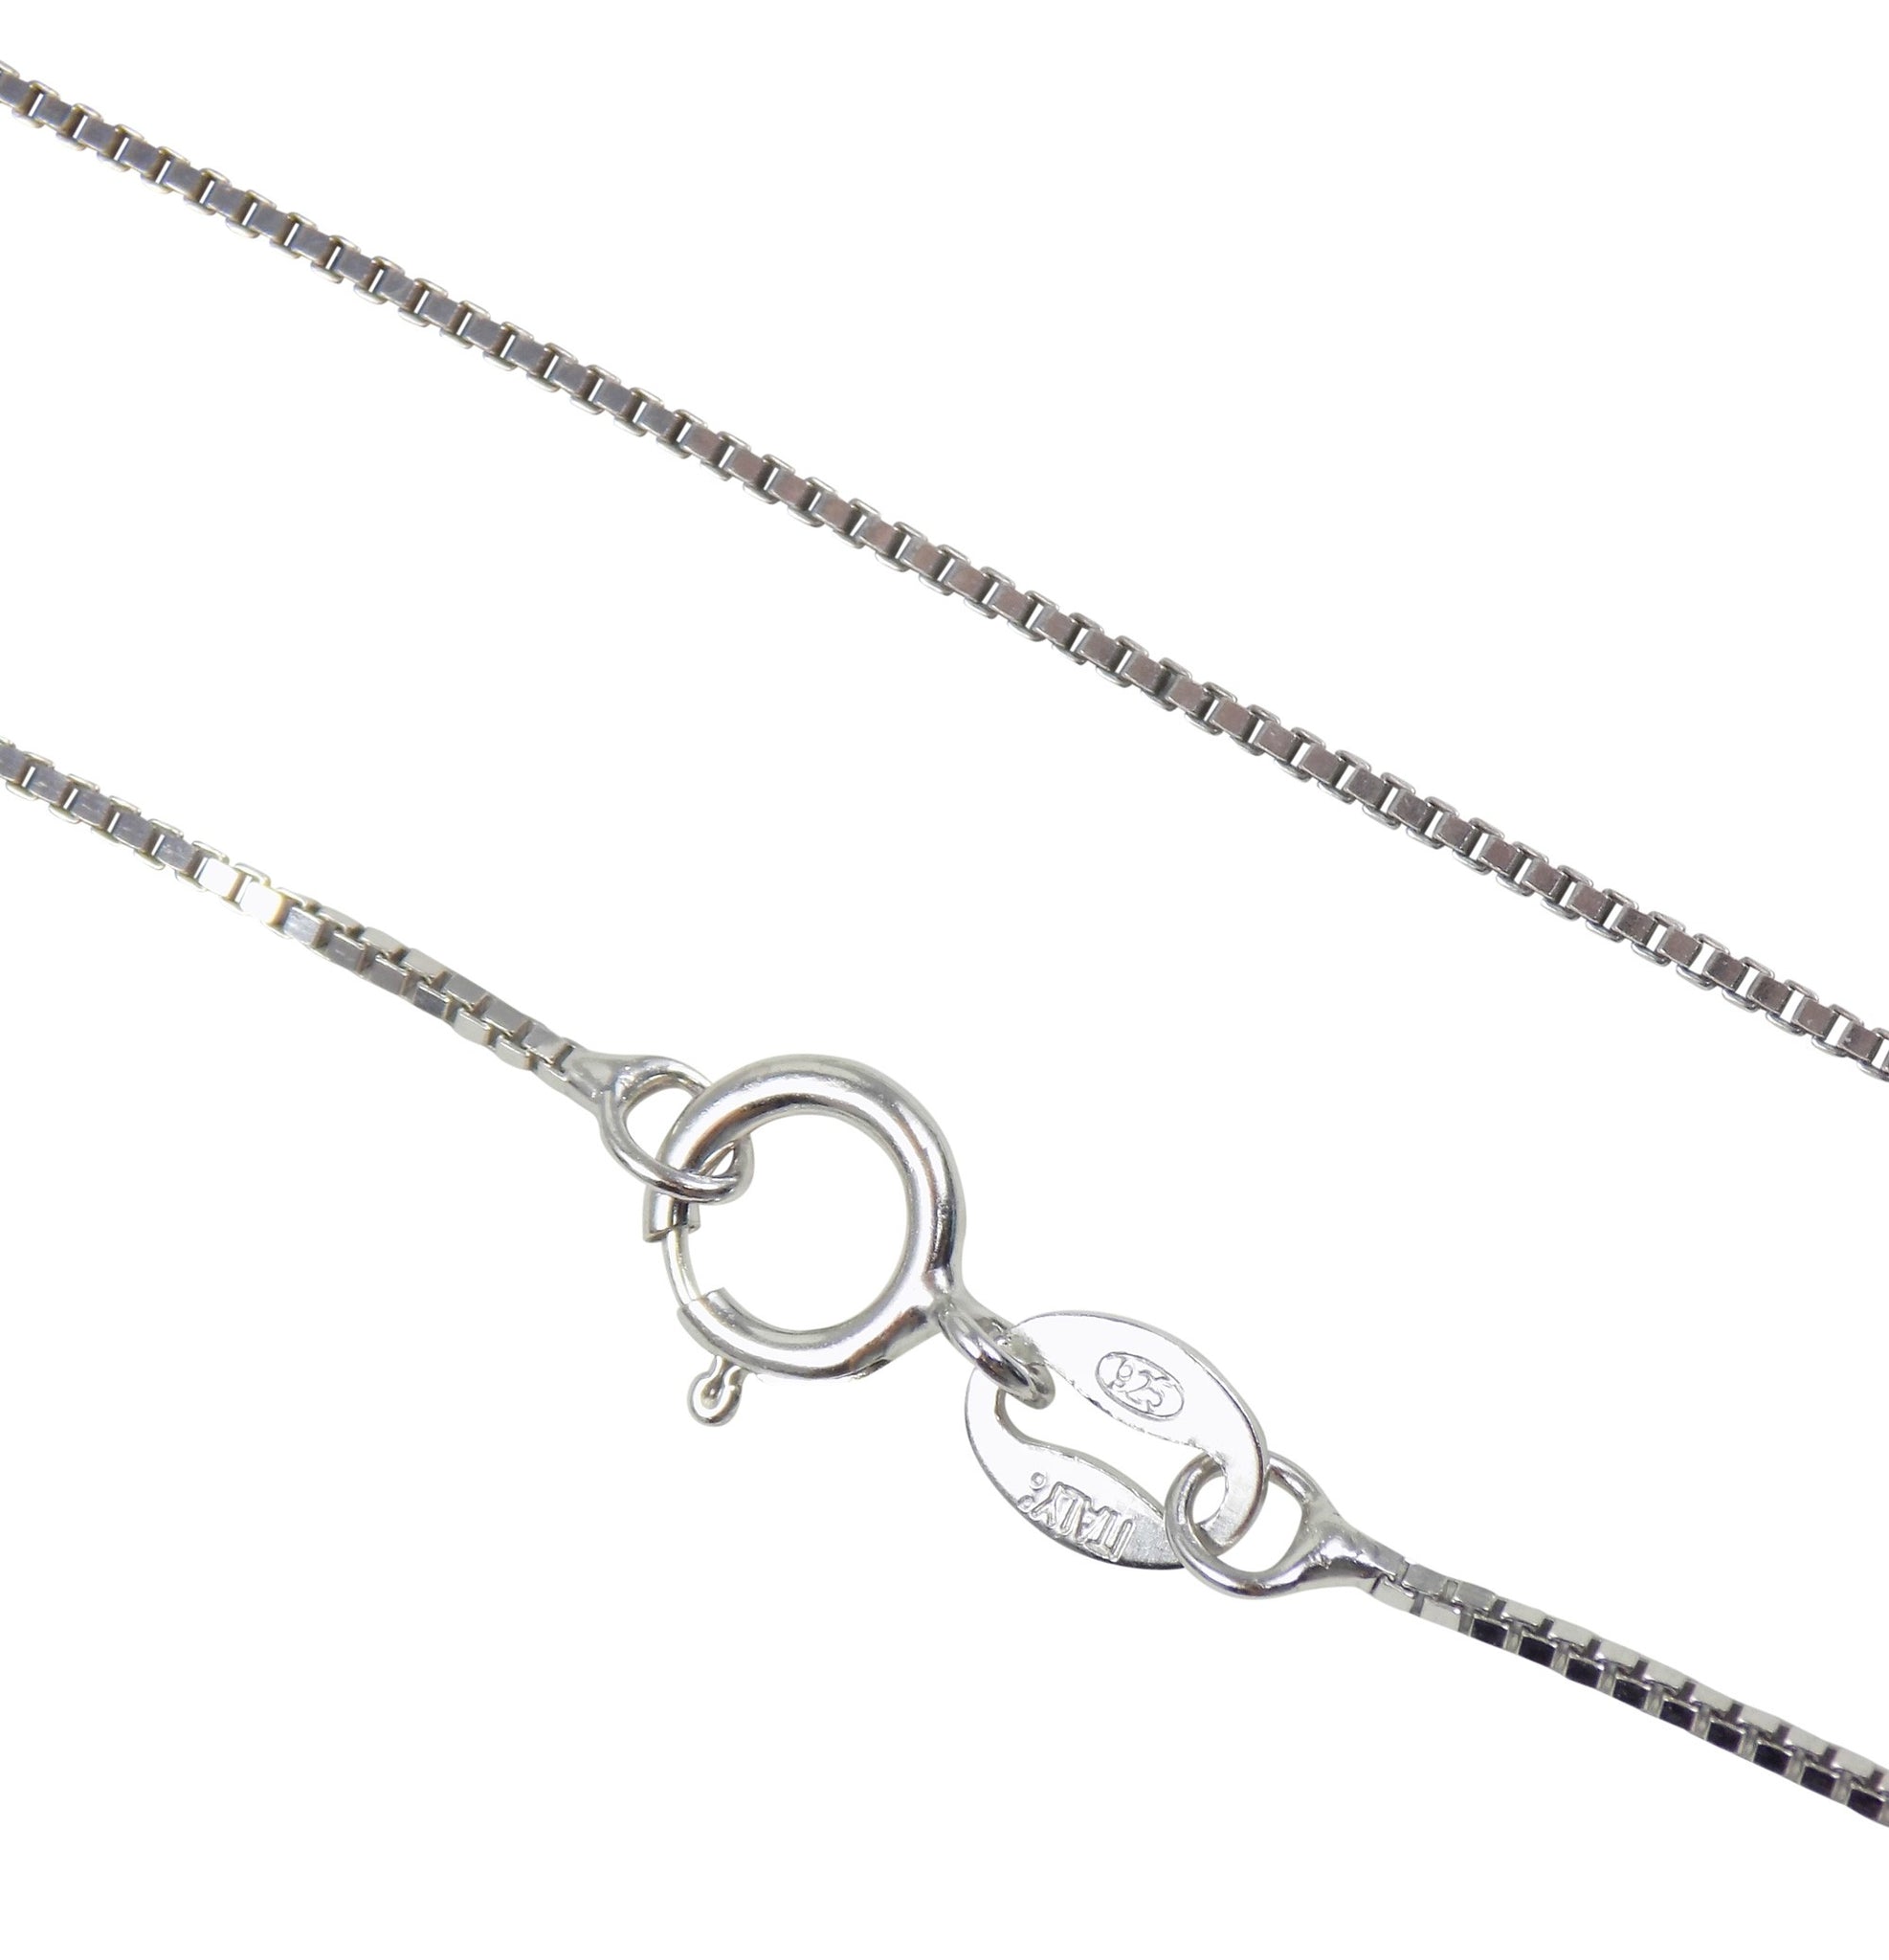 silver chain necklace for pendant. silver box chain wholesale